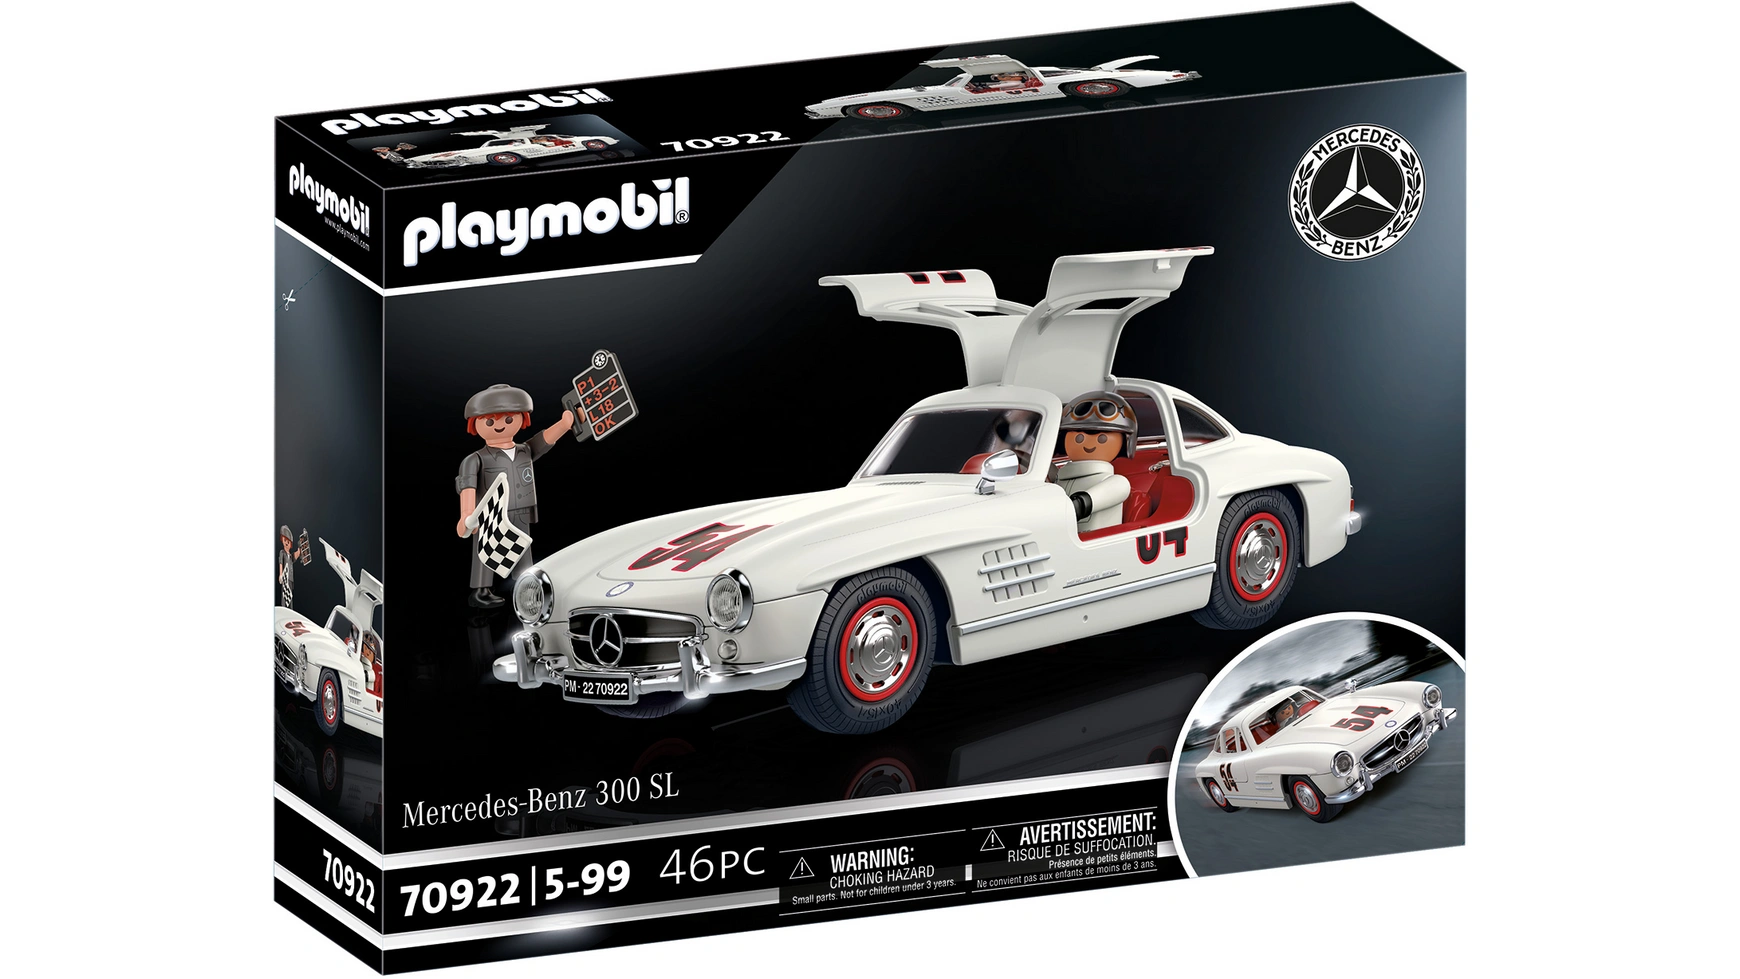 Mercedes-benz 300 sl Playmobil lewandowski jurgen mercedes benz 300 sl